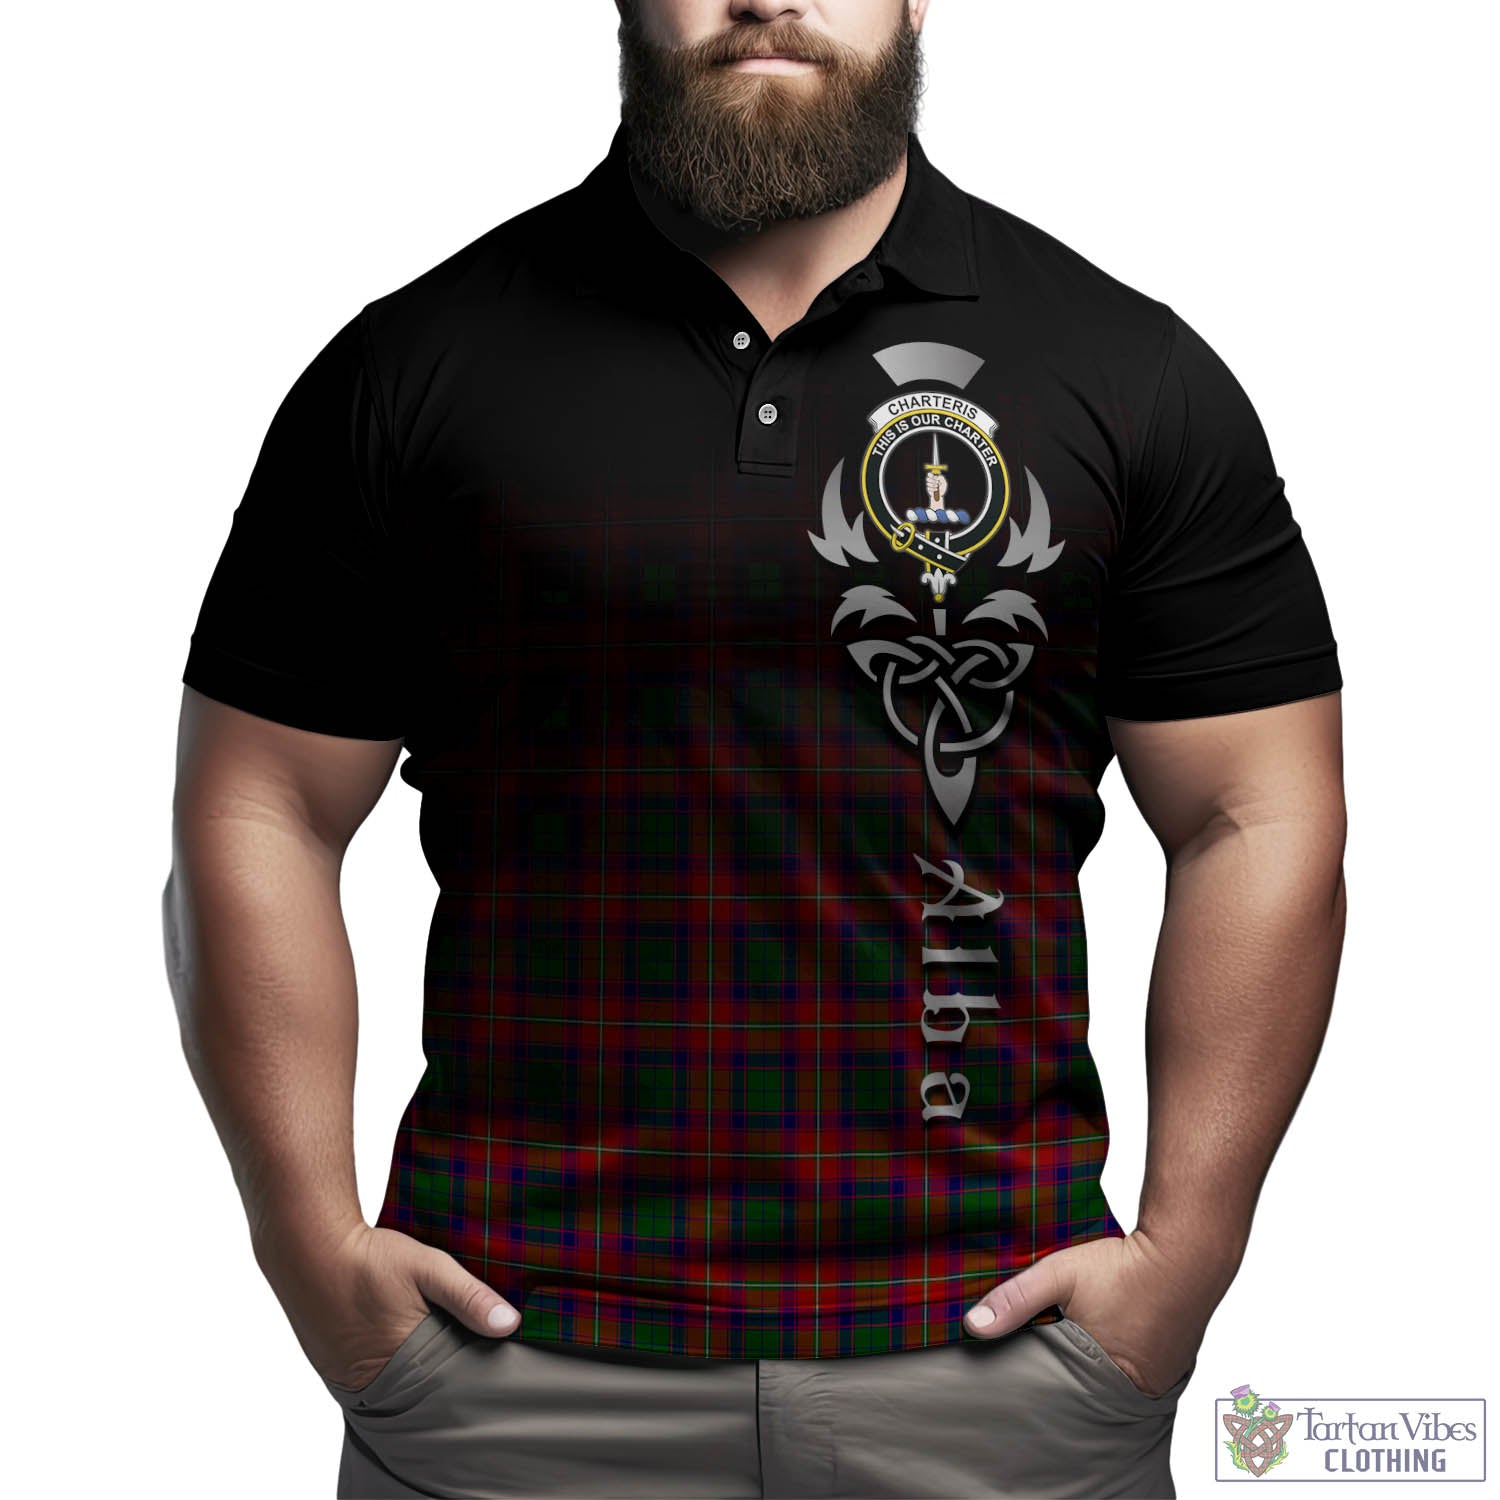 Tartan Vibes Clothing Charteris Tartan Polo Shirt Featuring Alba Gu Brath Family Crest Celtic Inspired